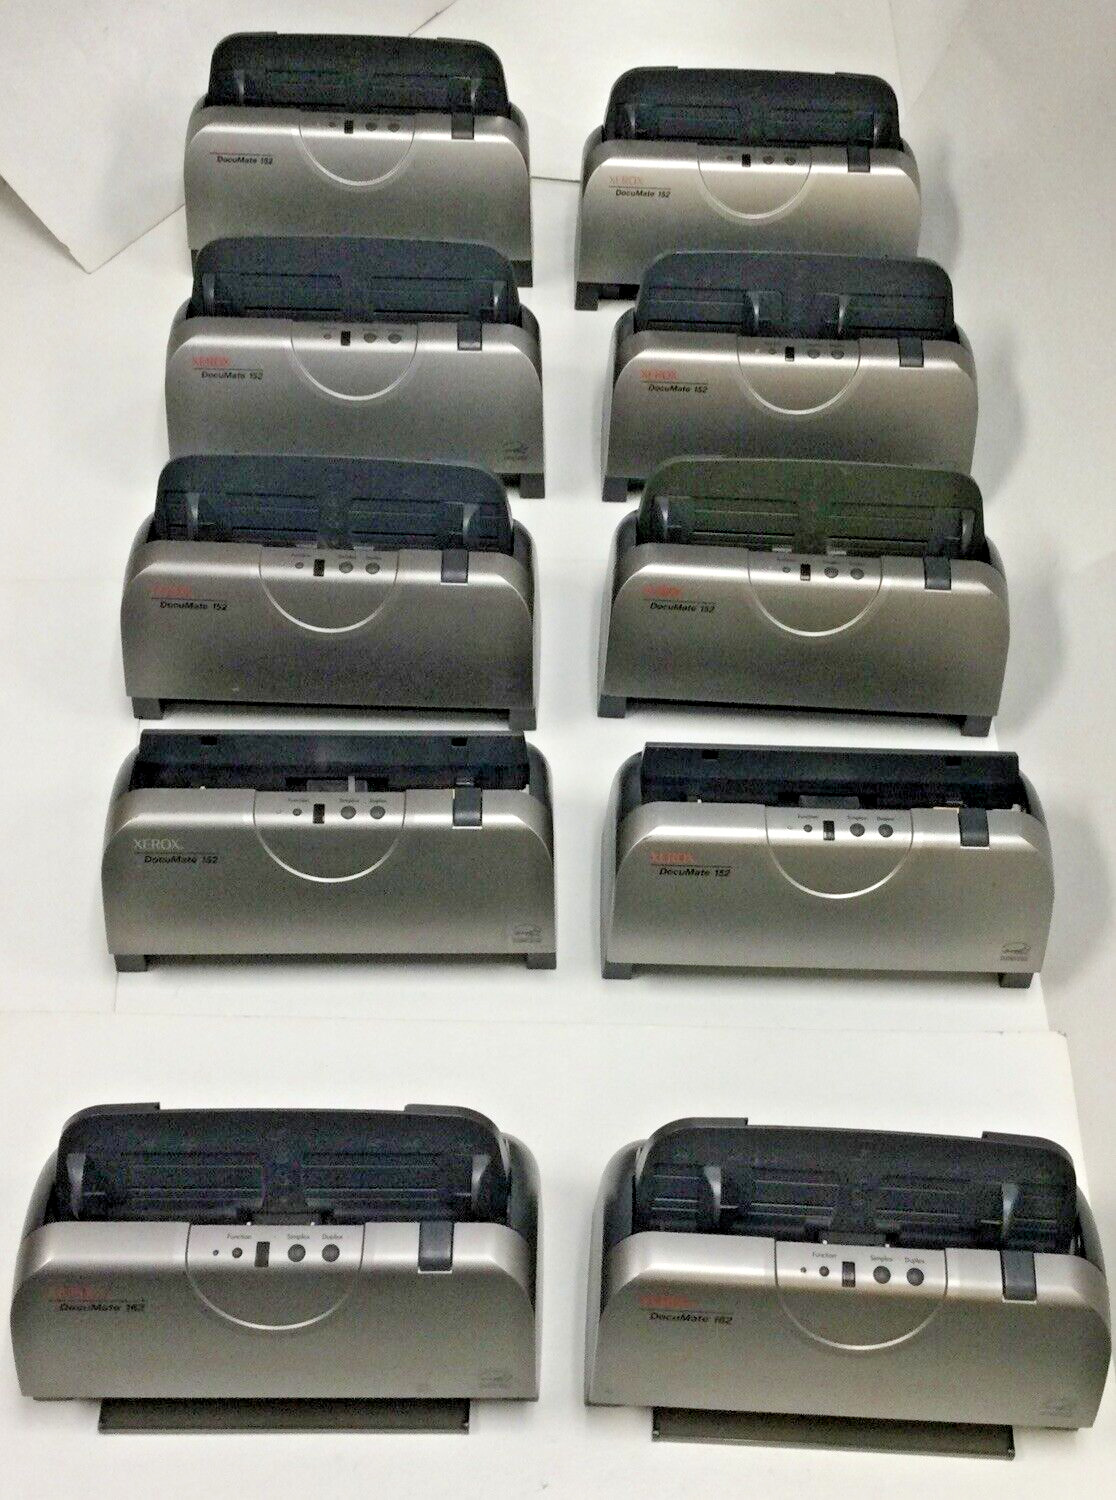 Wholesale lot of 10 XEROX DocuMate 152 (8) 162 (2) Scanners  -  All Power on